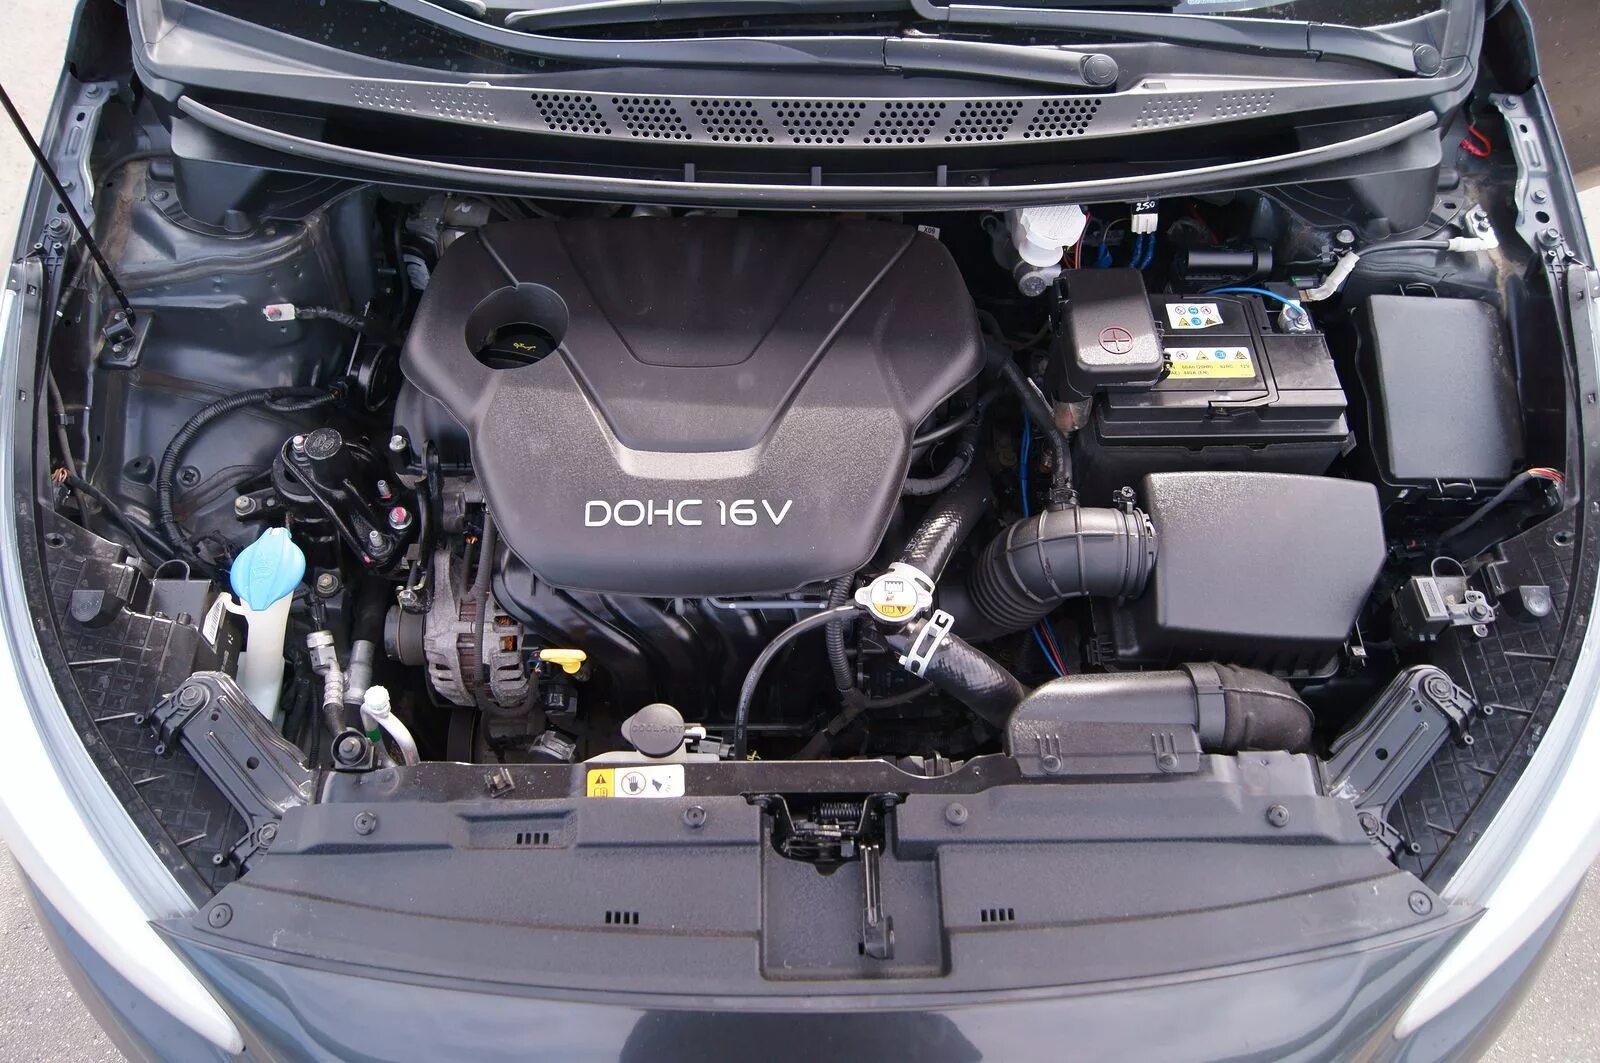 Kia ceed какой двигатель. Kia Ceed двигатель. Двигатель кия СИД 1.6. Kia Ceed 129 л.с мотор. Киа СИД 2015 год 1,6 автомат двигатель.